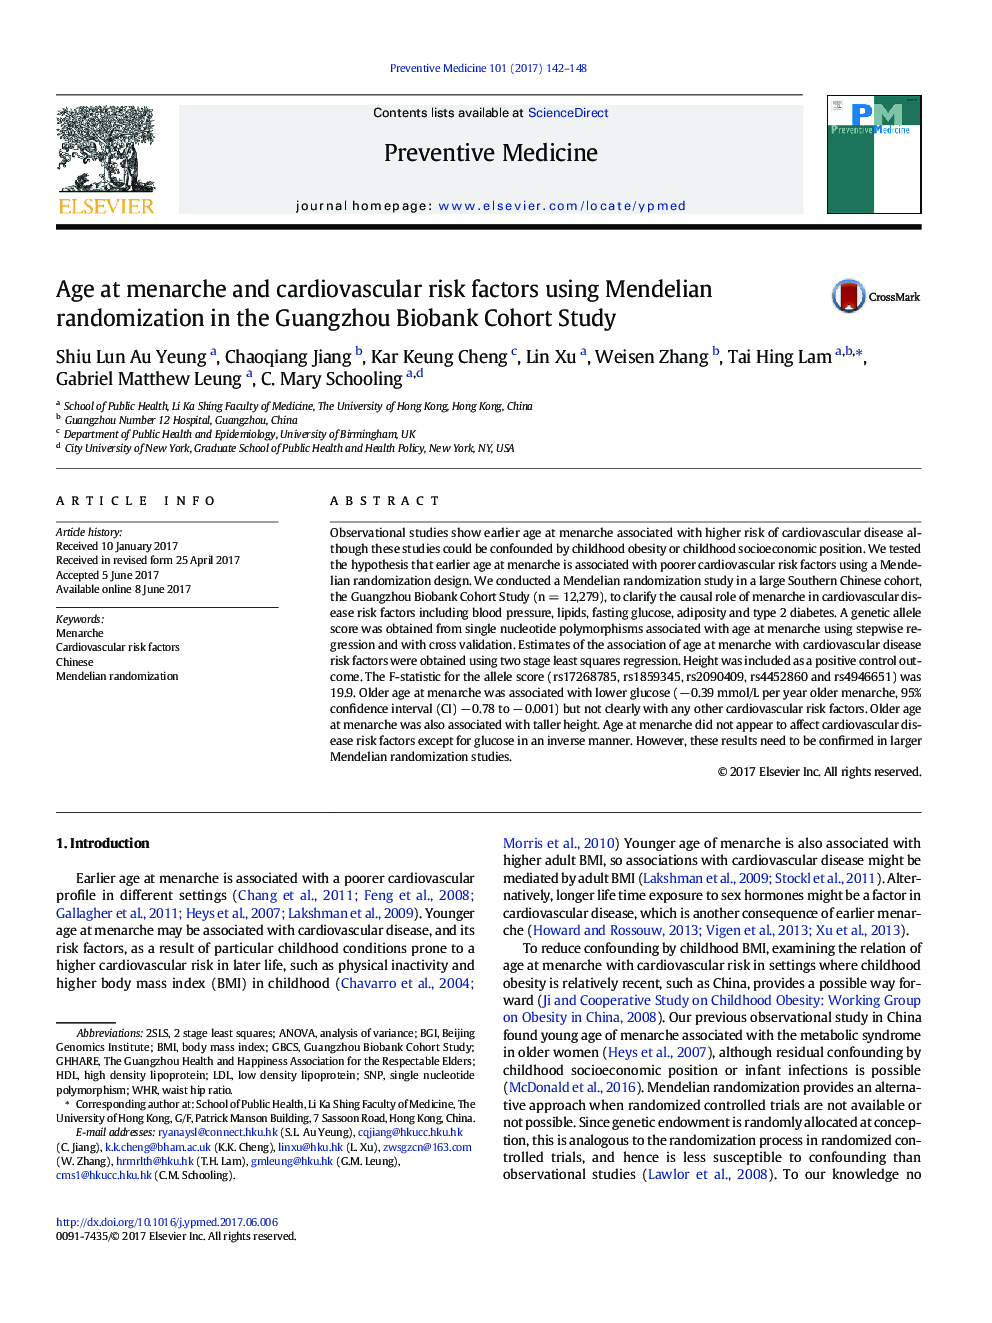 Age at menarche and cardiovascular risk factors using Mendelian randomization in the Guangzhou Biobank Cohort Study